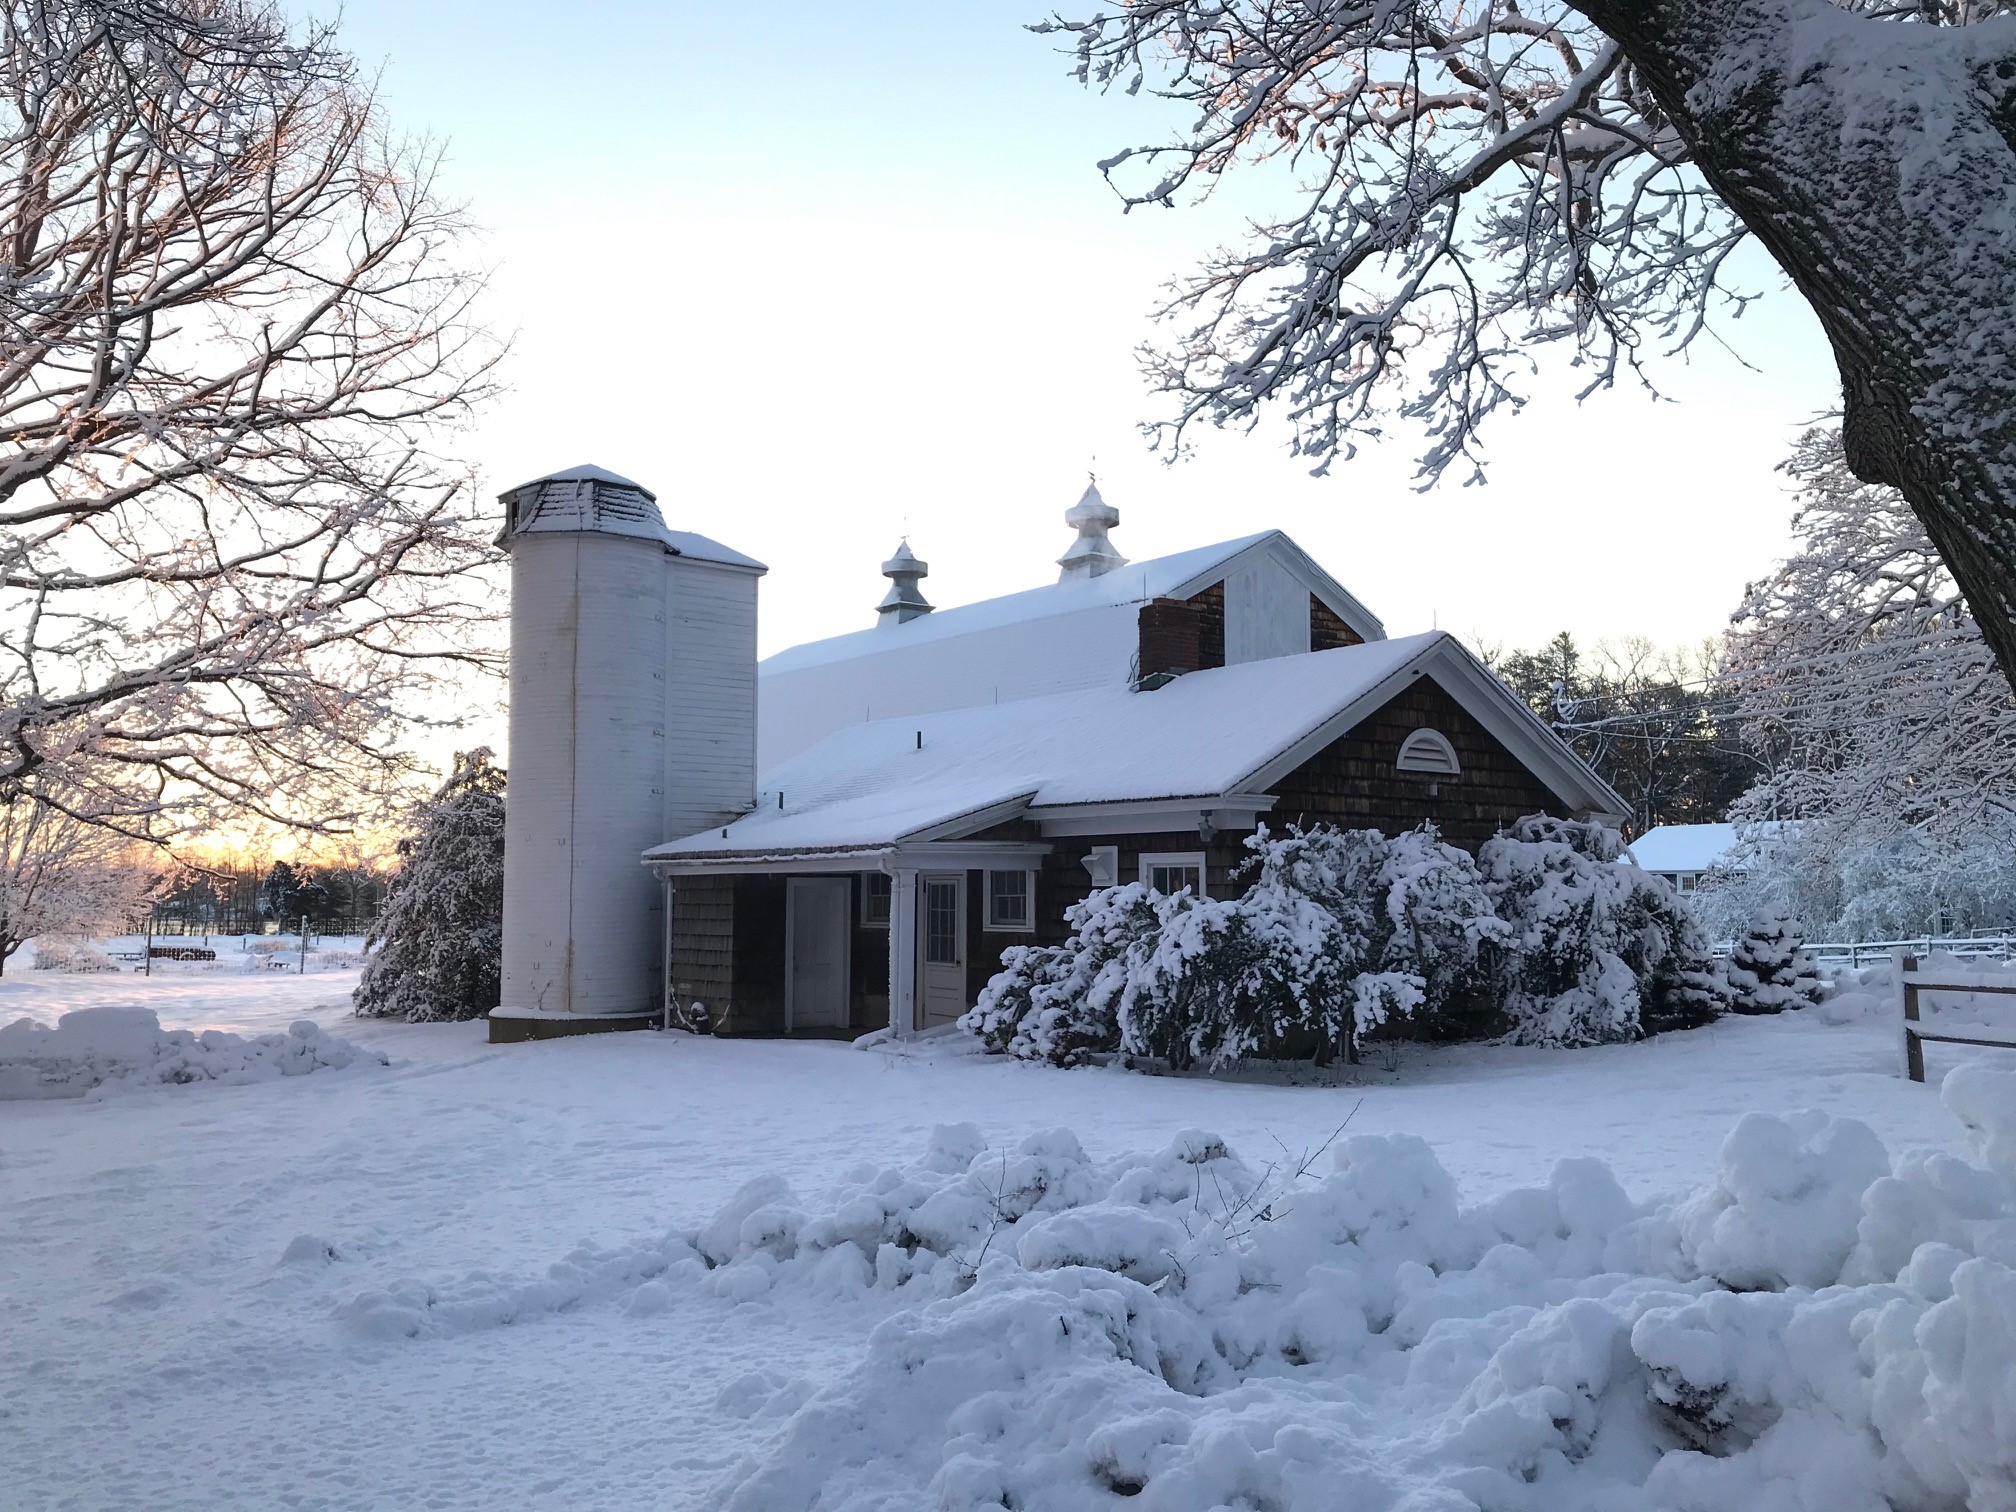 Snowy Barn